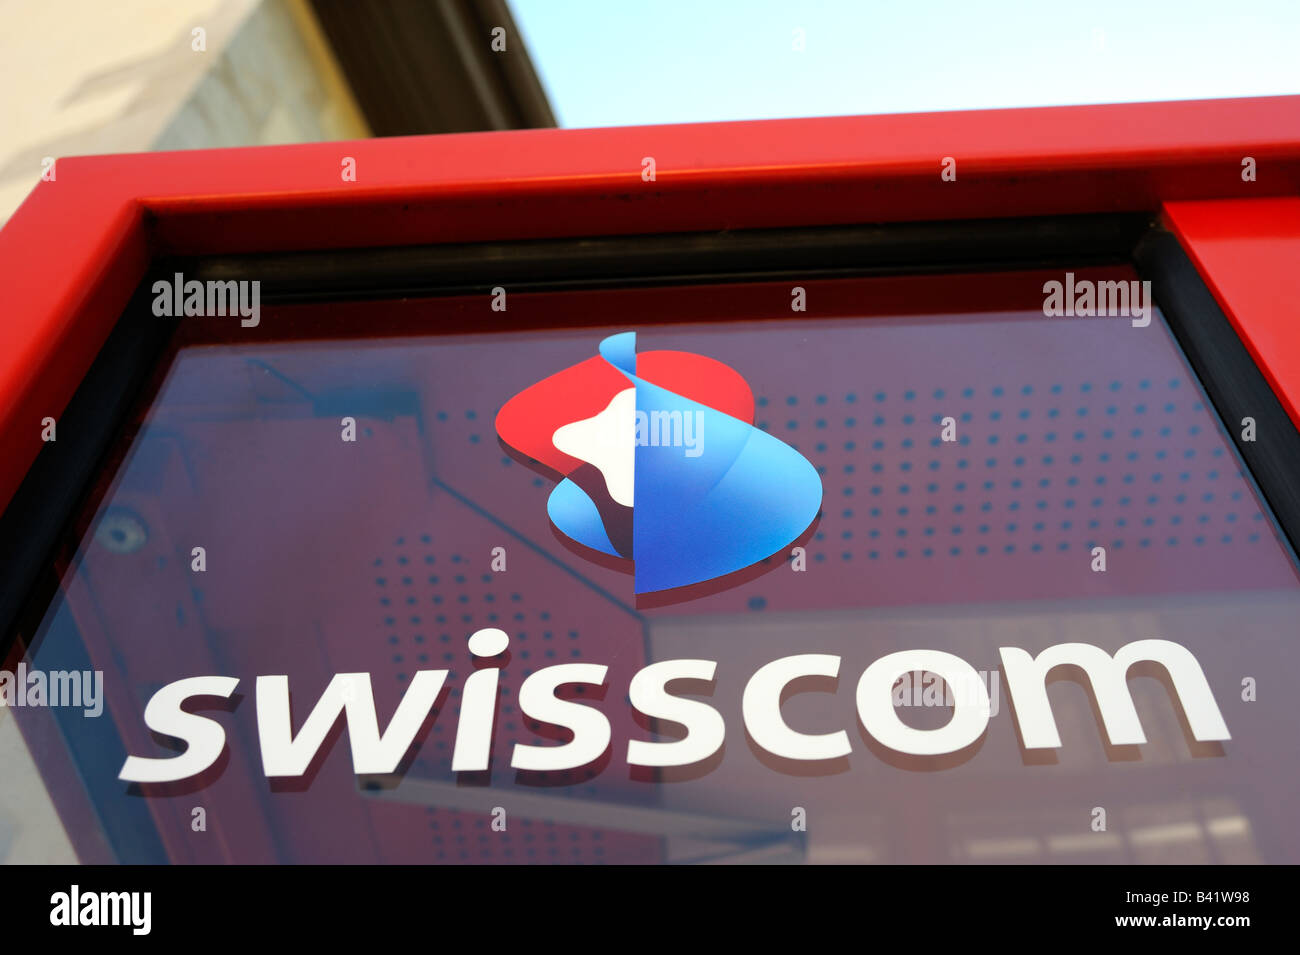 Telephone booth with swisscom logo on it. Stock Photo